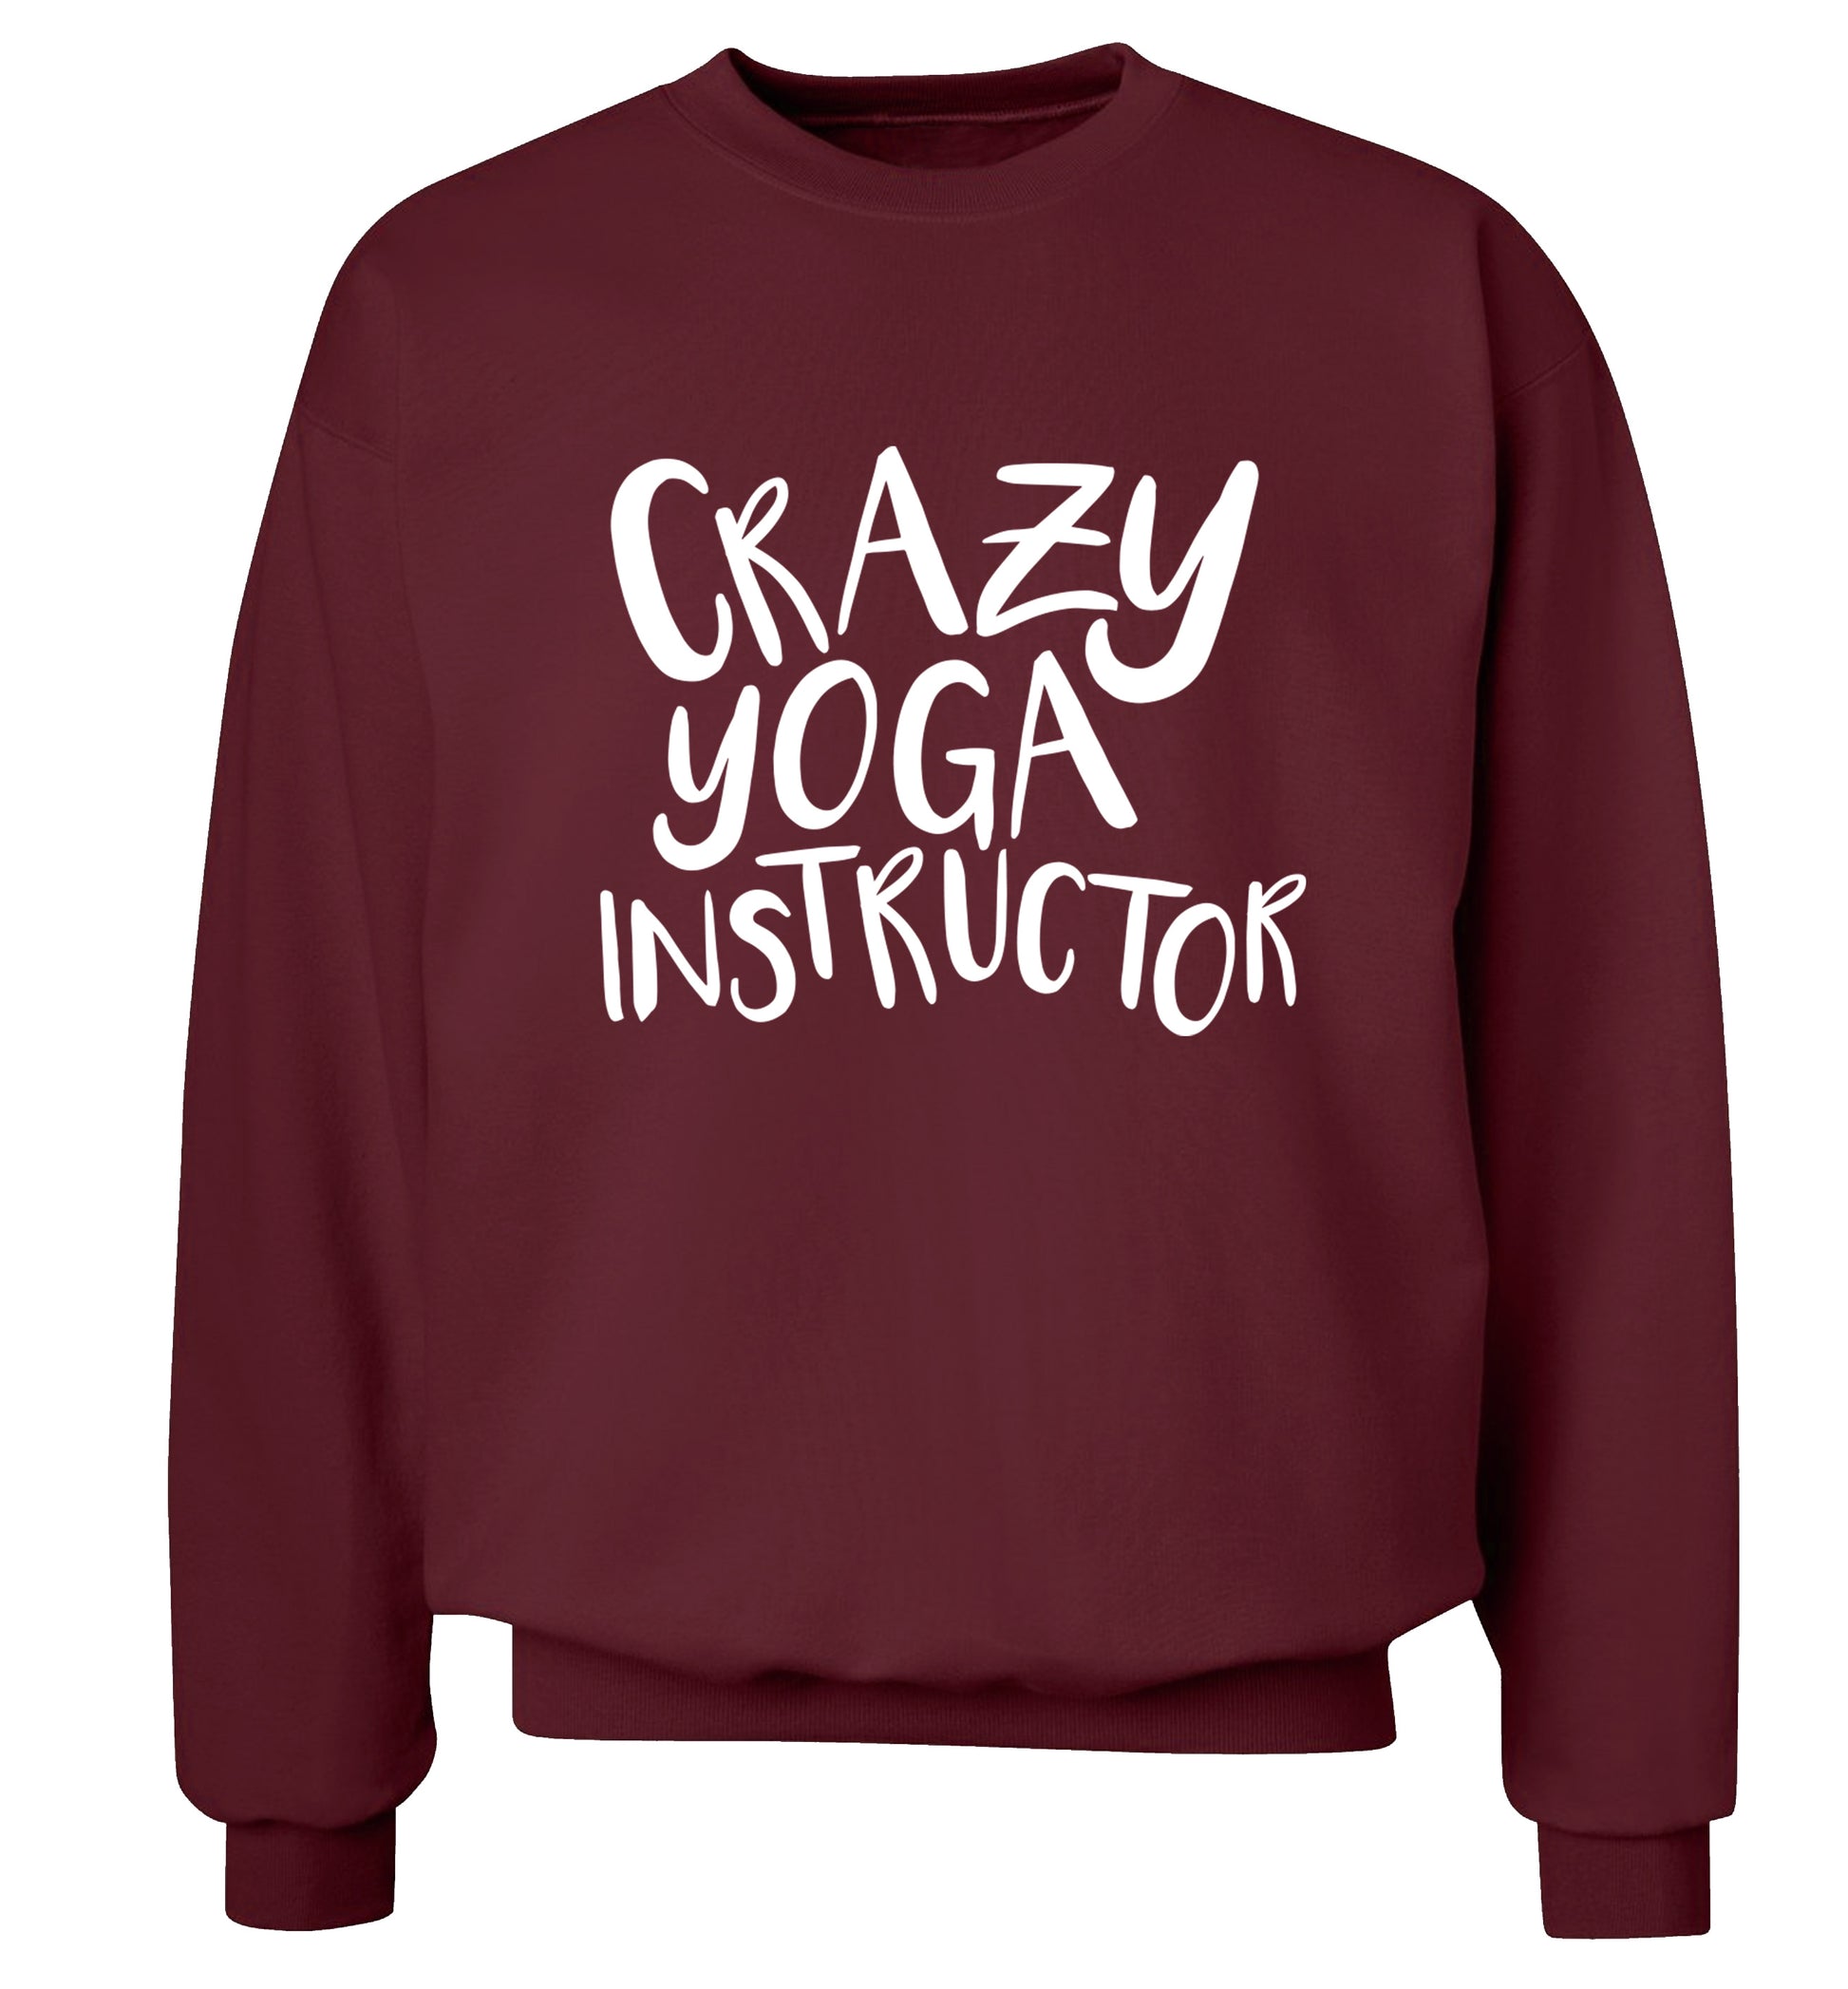 Crazy yoga instructor Adult's unisex maroon Sweater 2XL